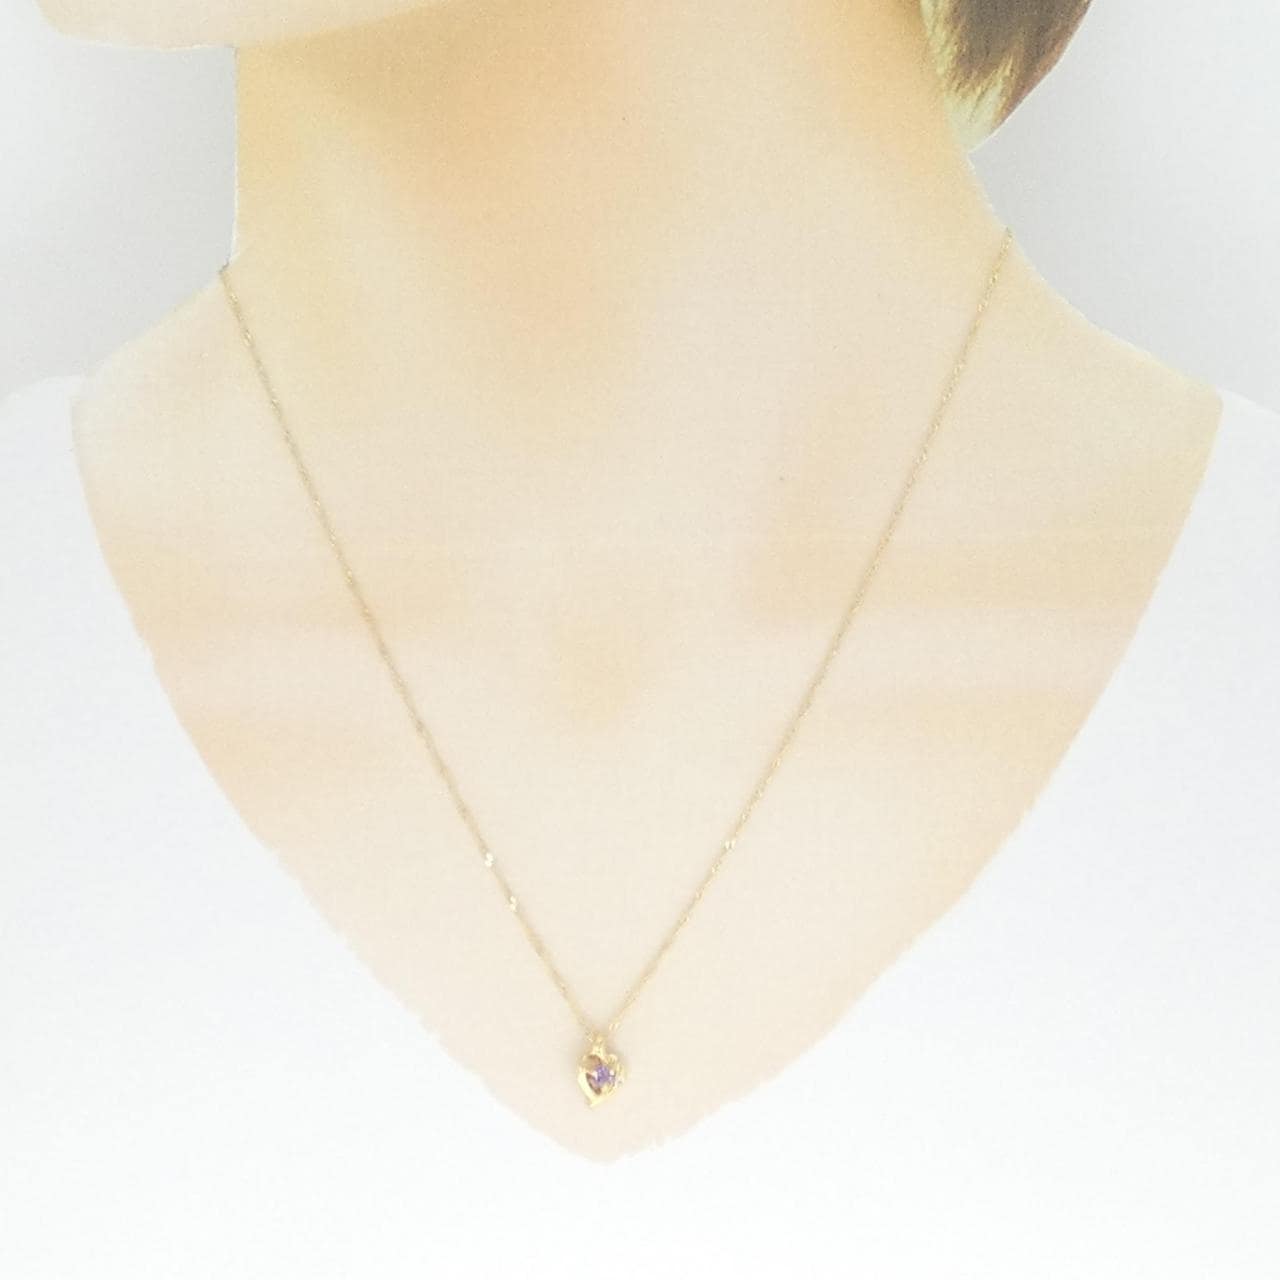 K18YG heart amethyst necklace